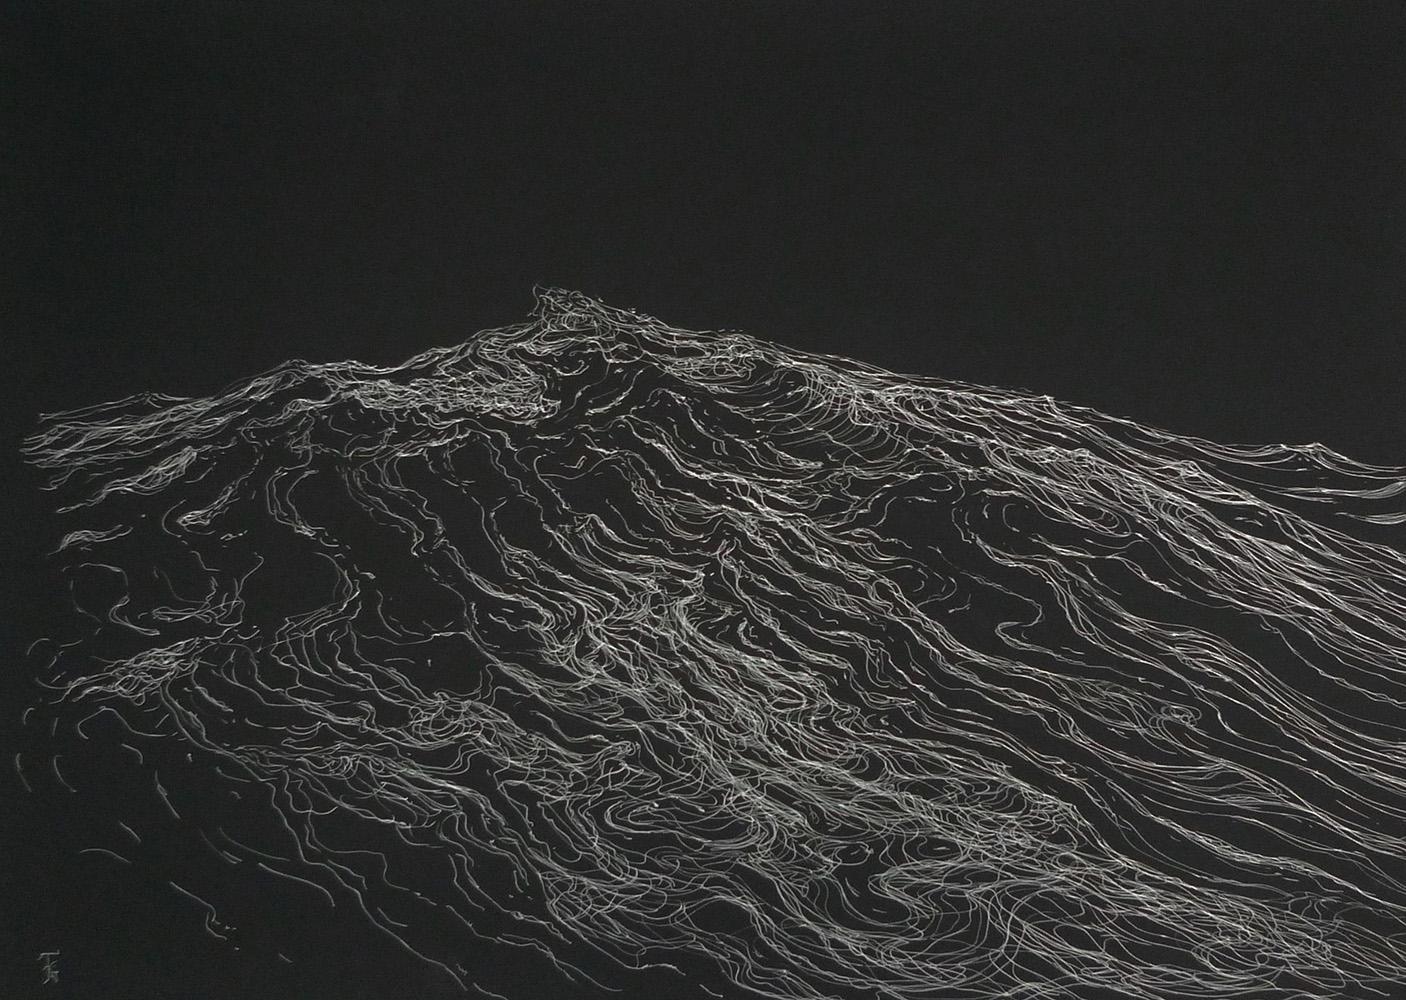 Dantesque by Franco Salas Borquez - Work on paper, ocean waves, black and silver